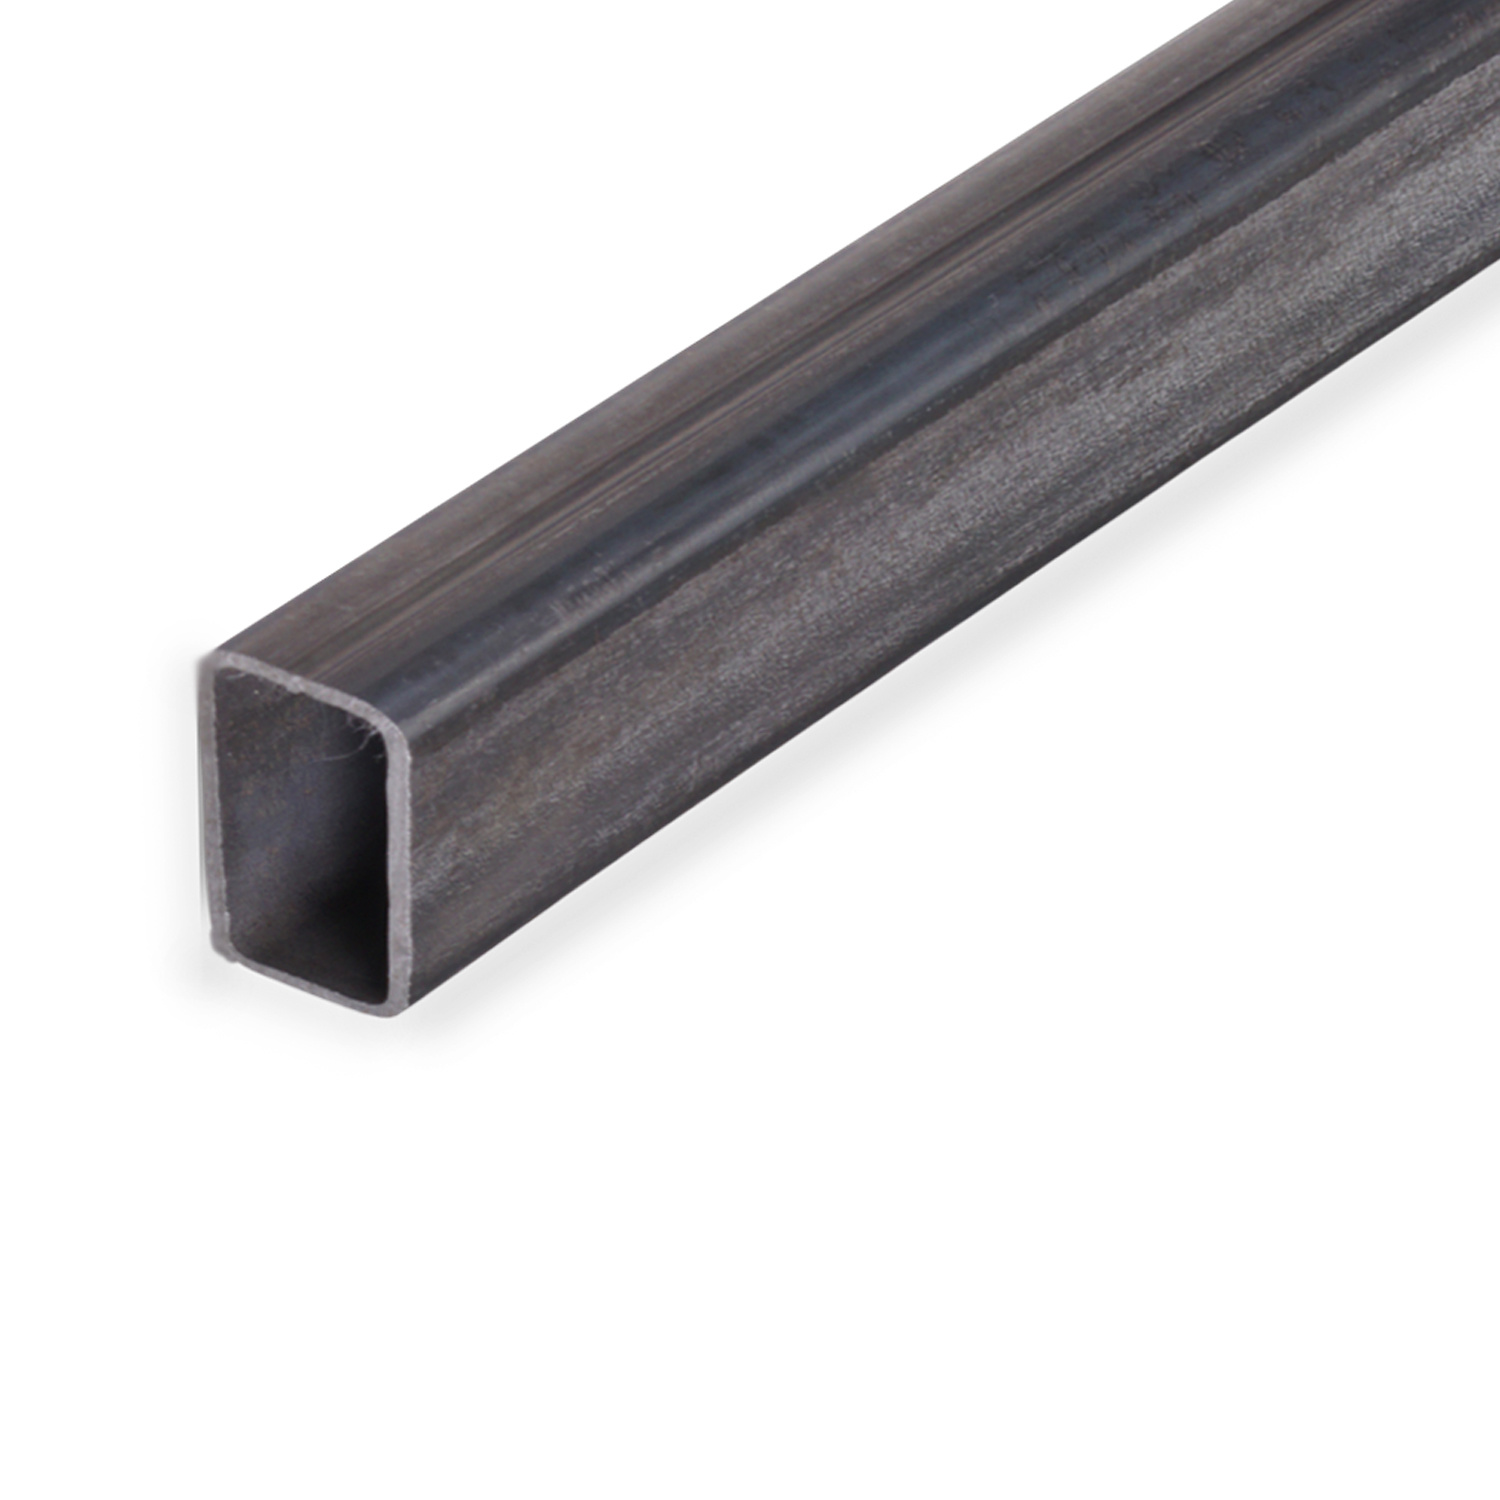  Koker staal - rechthoekige buis kokerprofiel KGV staal - S235JR - 60x30x2 MM